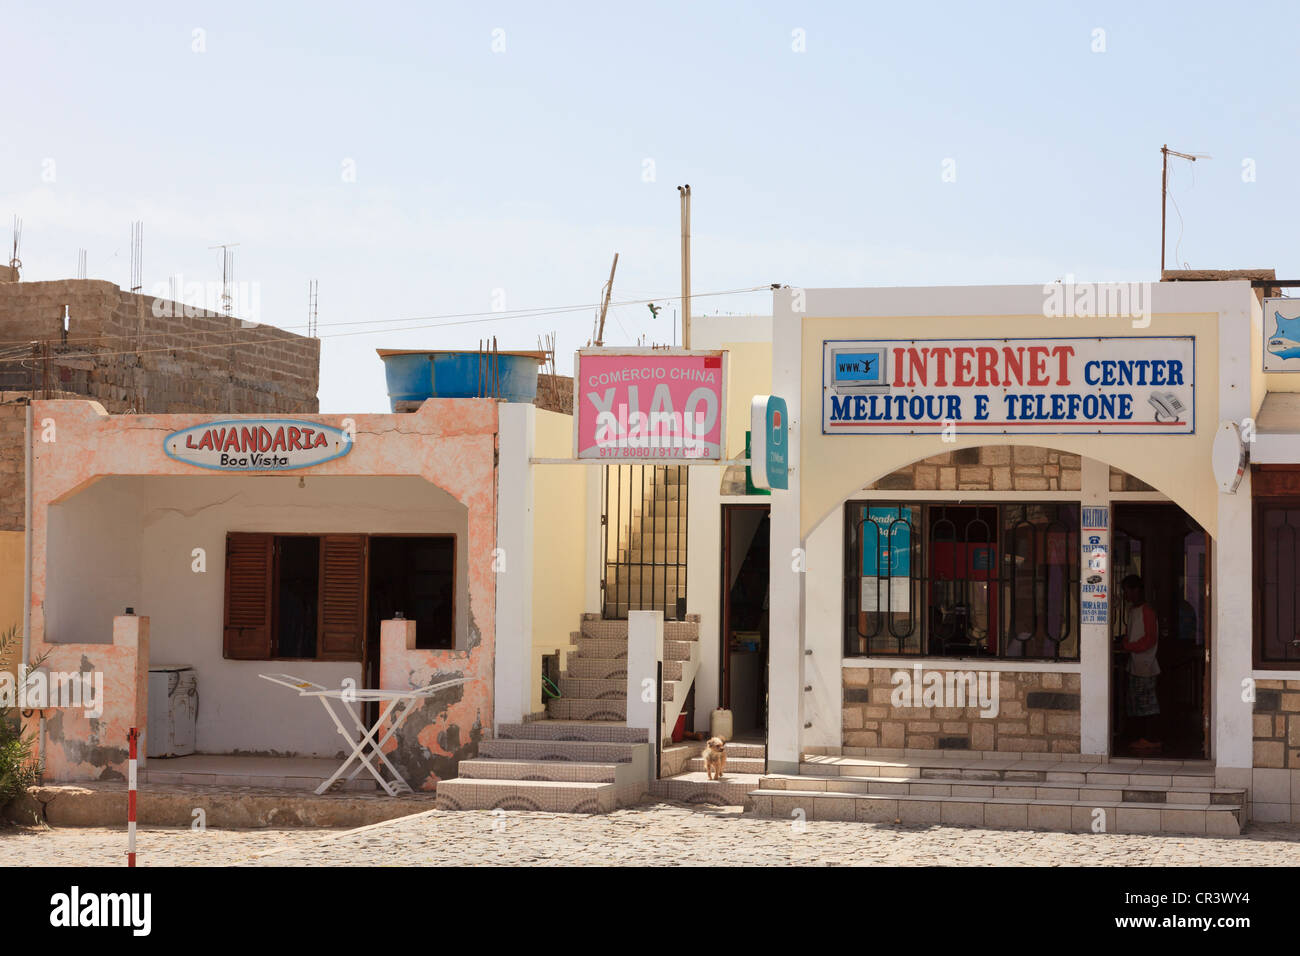 Internet shop and launderette (Lavaria) in the town centre of Sal Rei, Boa Vista, Cape Verde Islands. Stock Photo